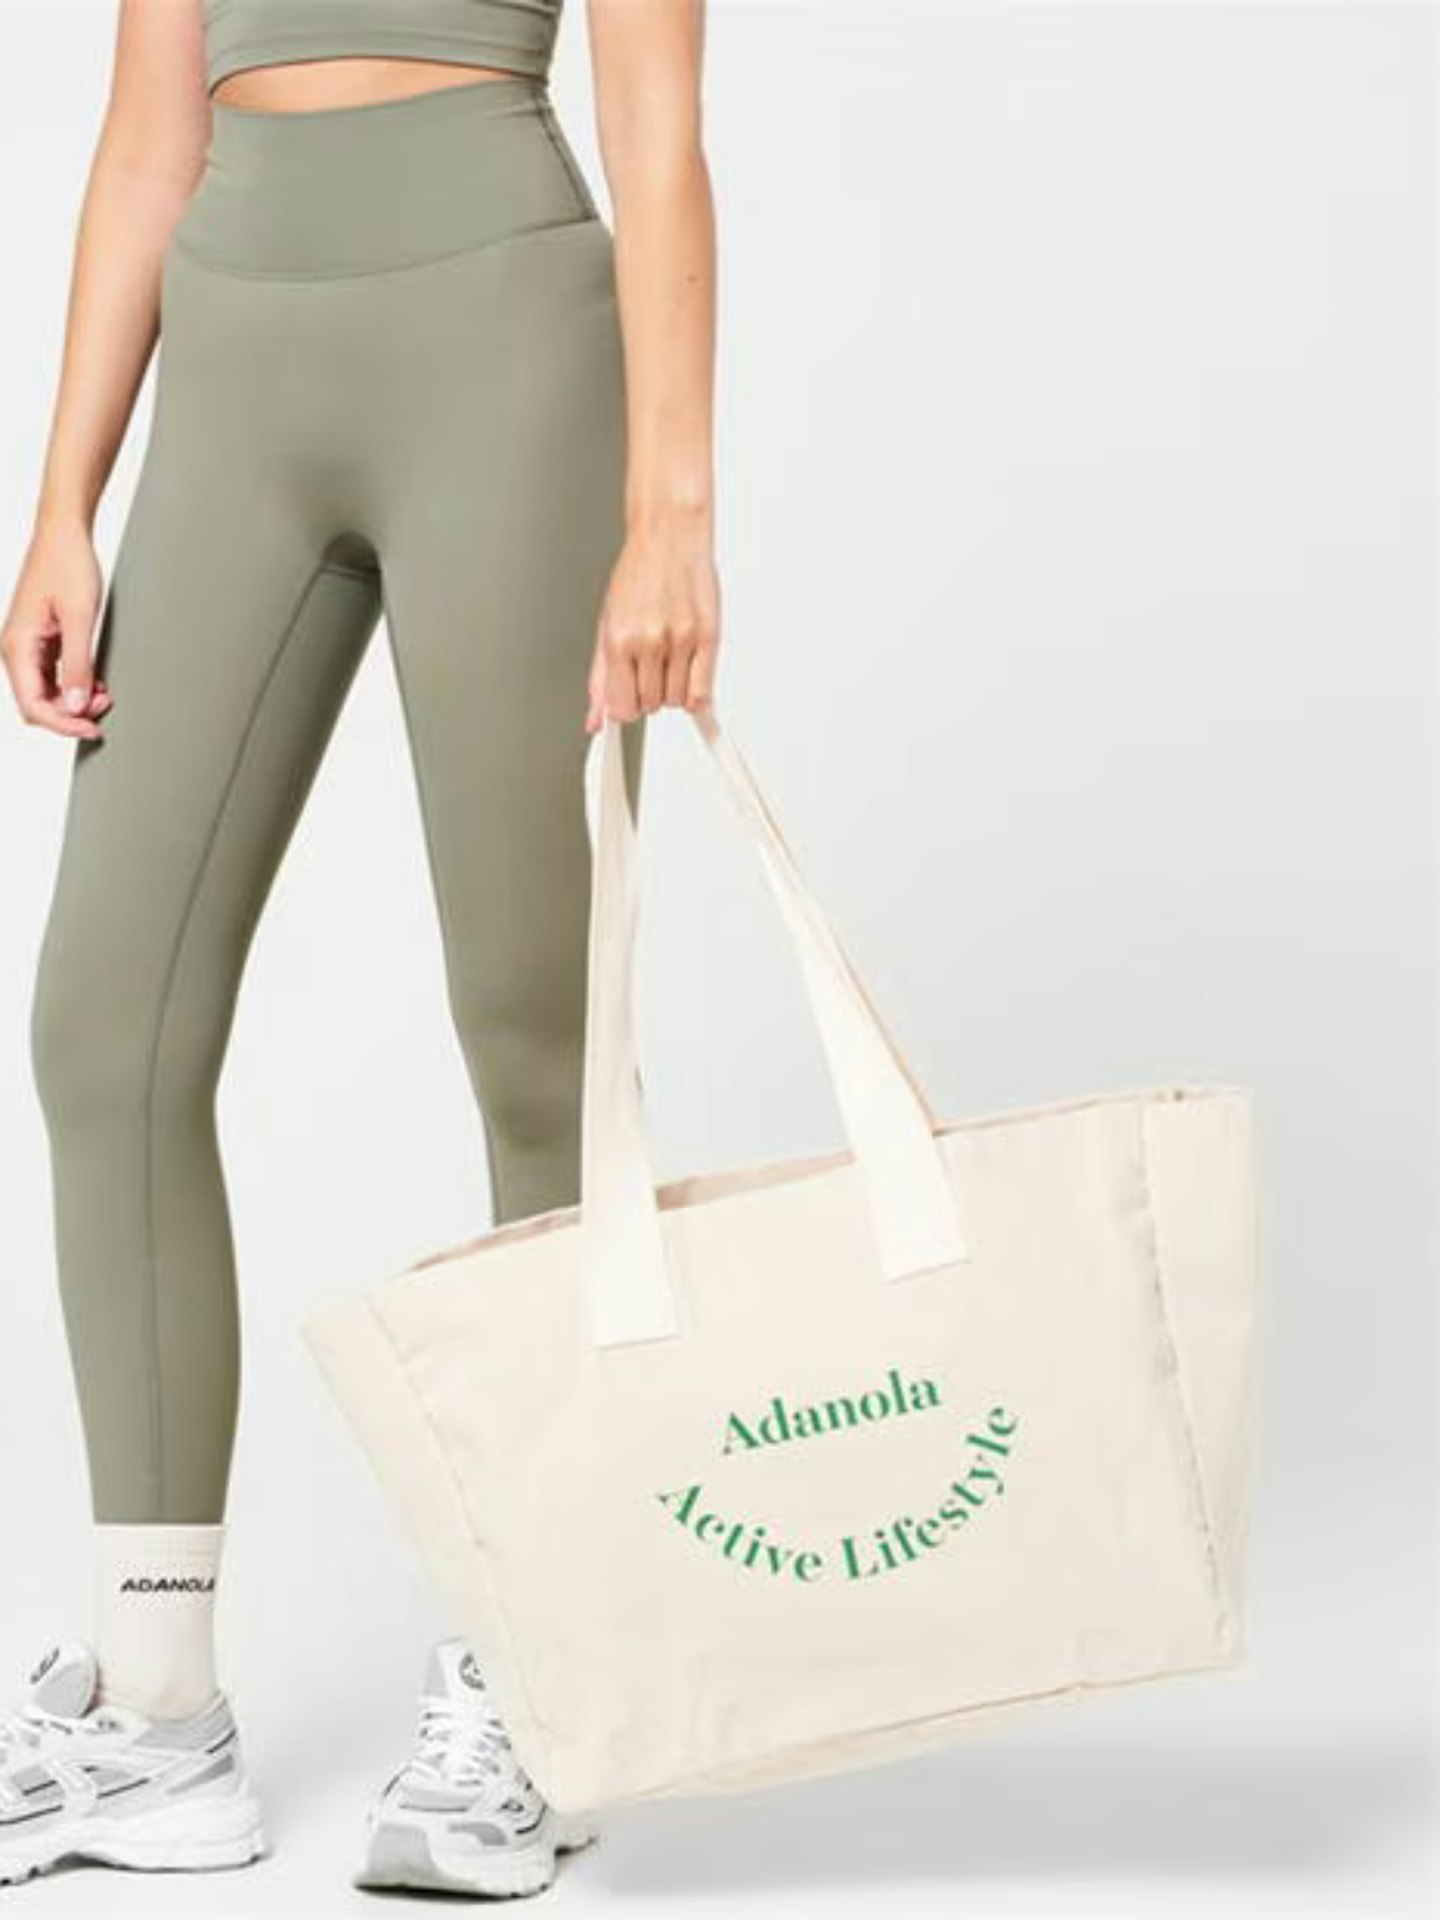 Adanola, Active Lifestyle Tote Bag